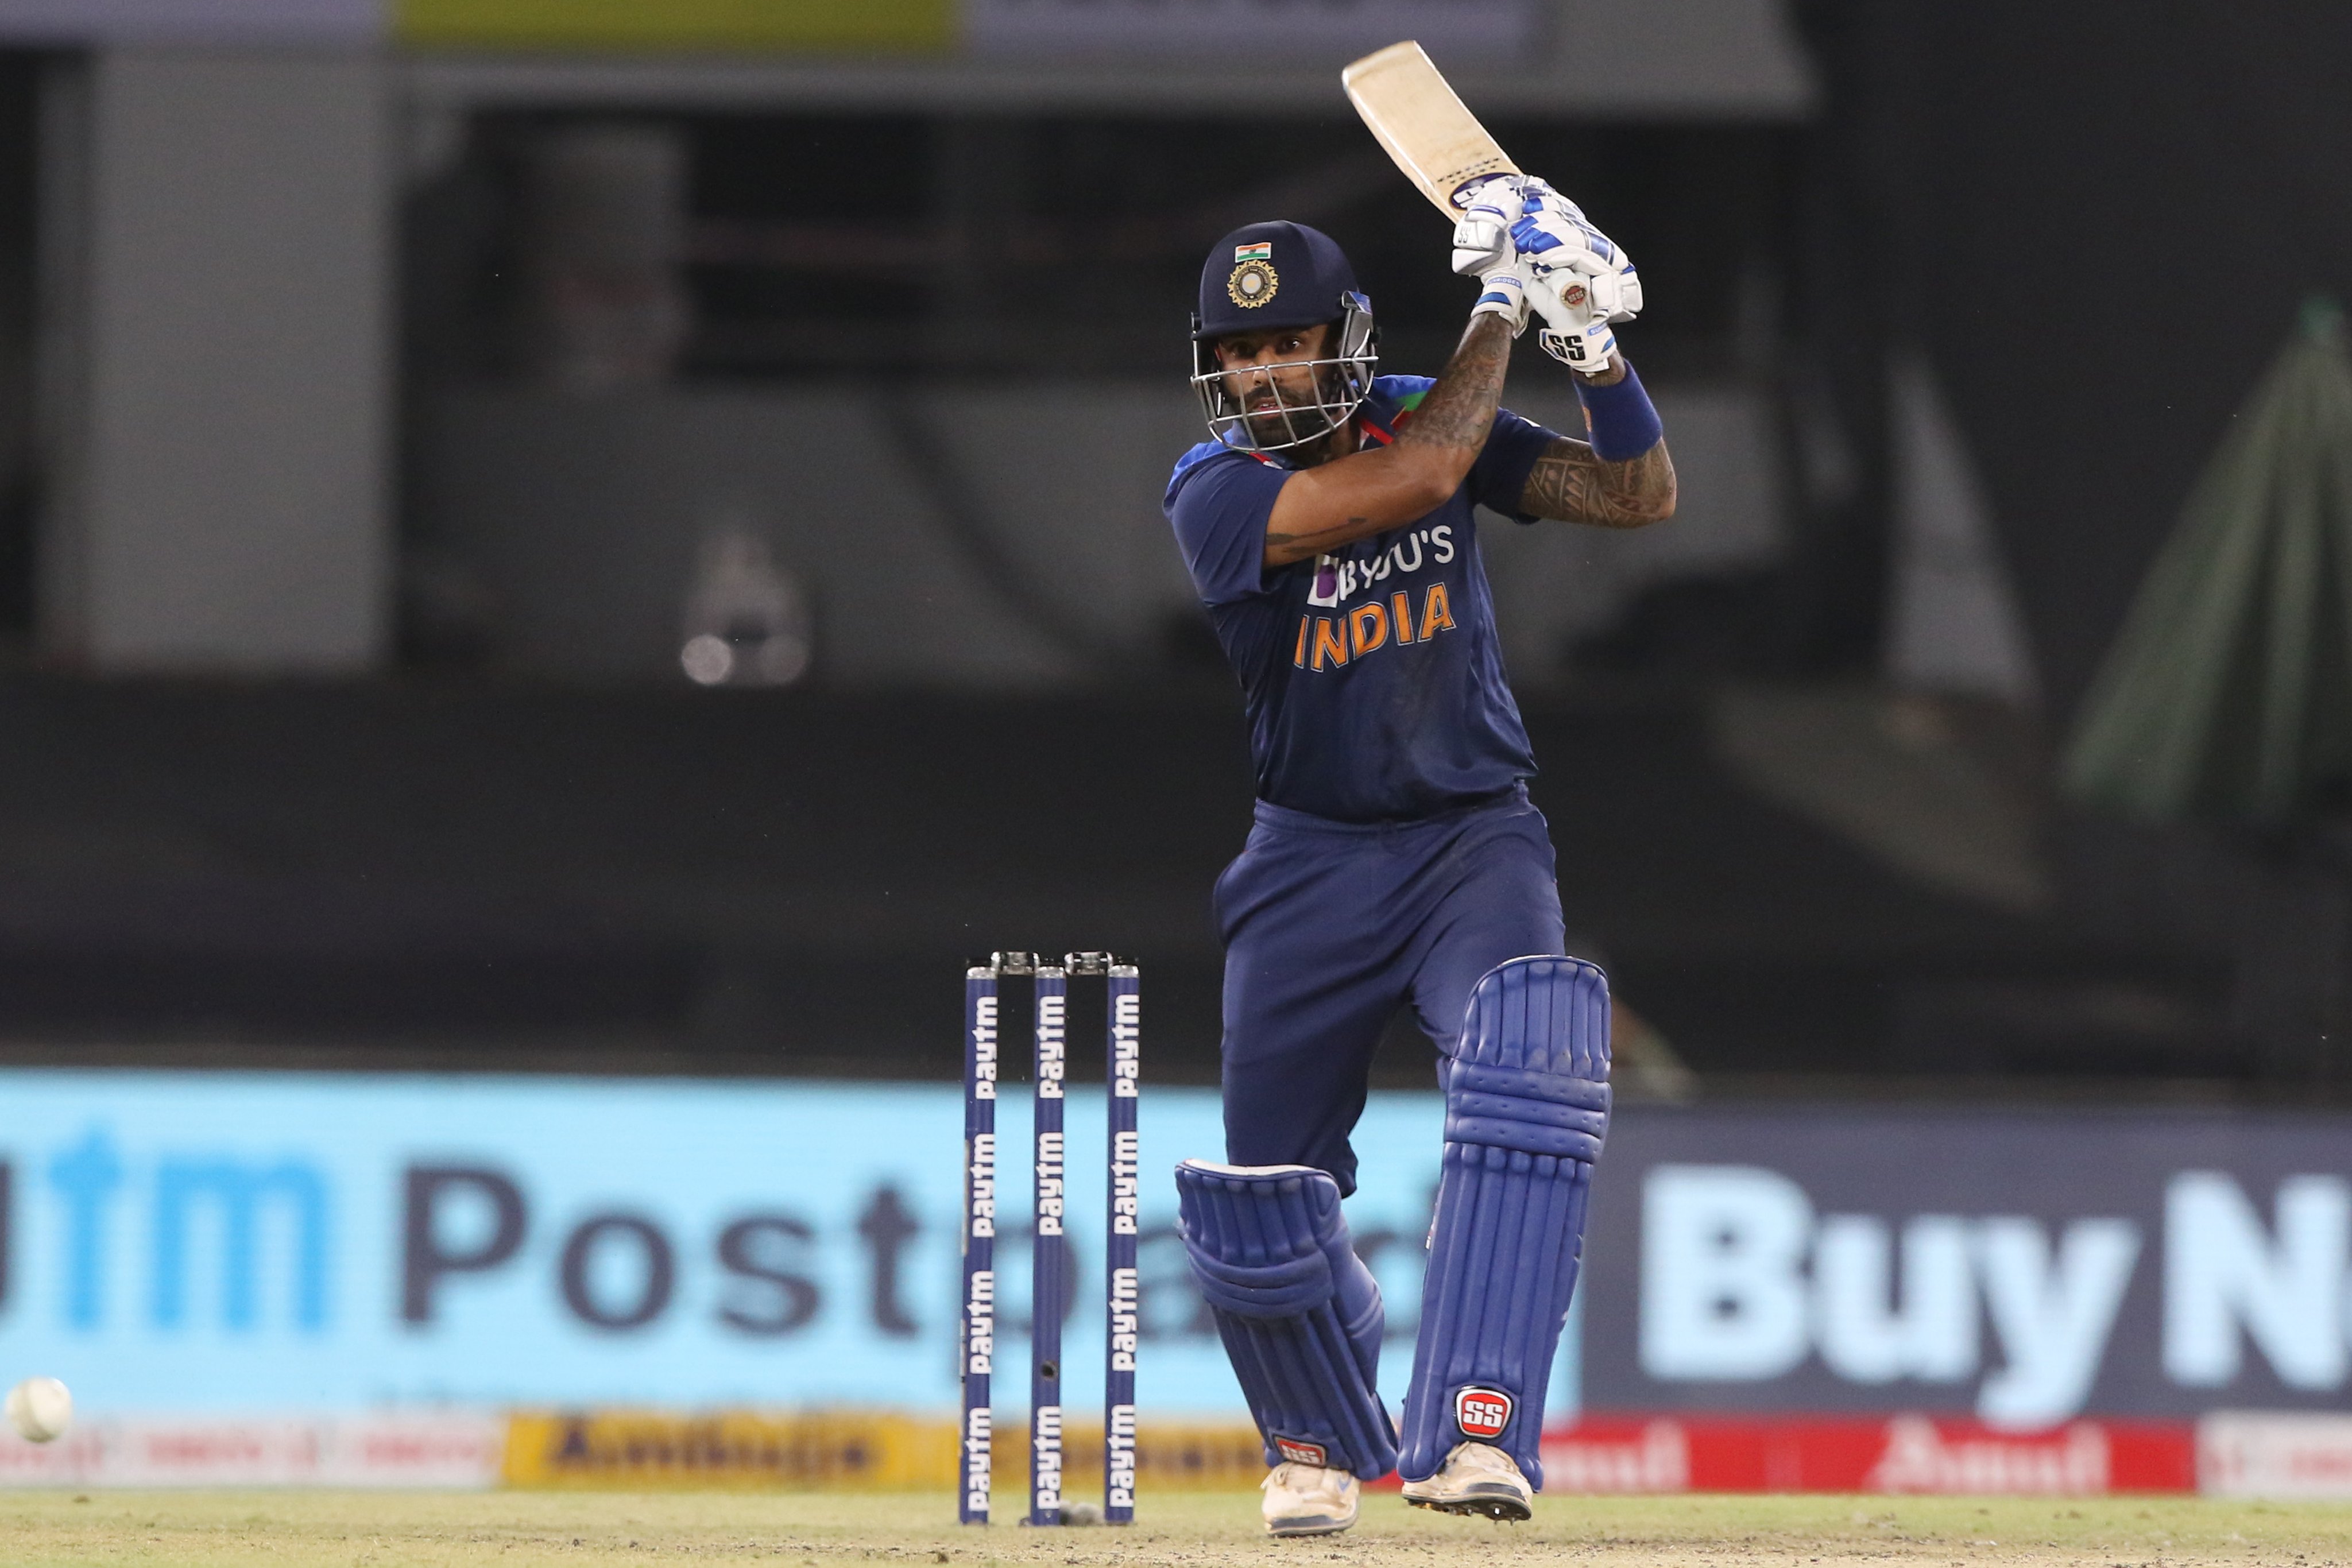 IND vs ENG | Suryakumar Yadav, Prasidh Krishna, Krunal Pandya recieve maiden call-up to Indian ODI squad